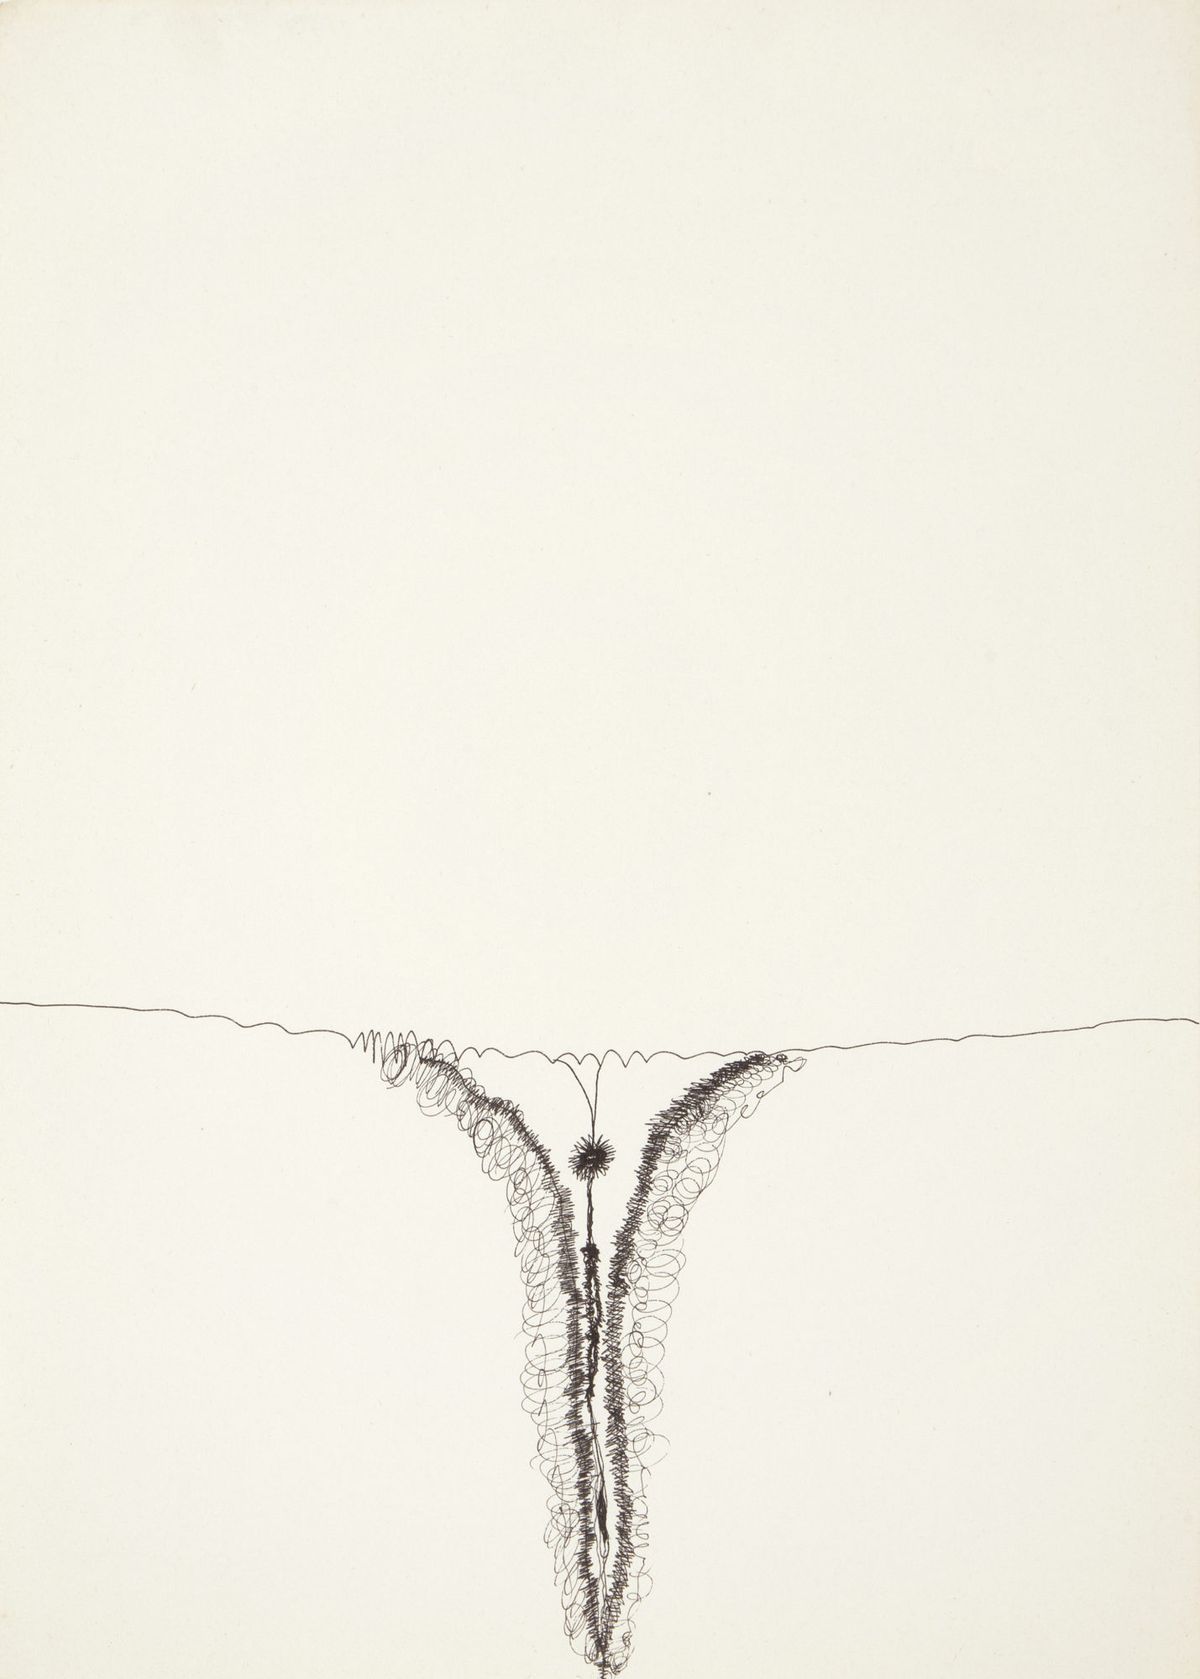 Huguette Caland's Untitled (1971) was included in the 57th Venice Biennale Viva Arte Viva Courtesy of Galerie Janine Rubeiz